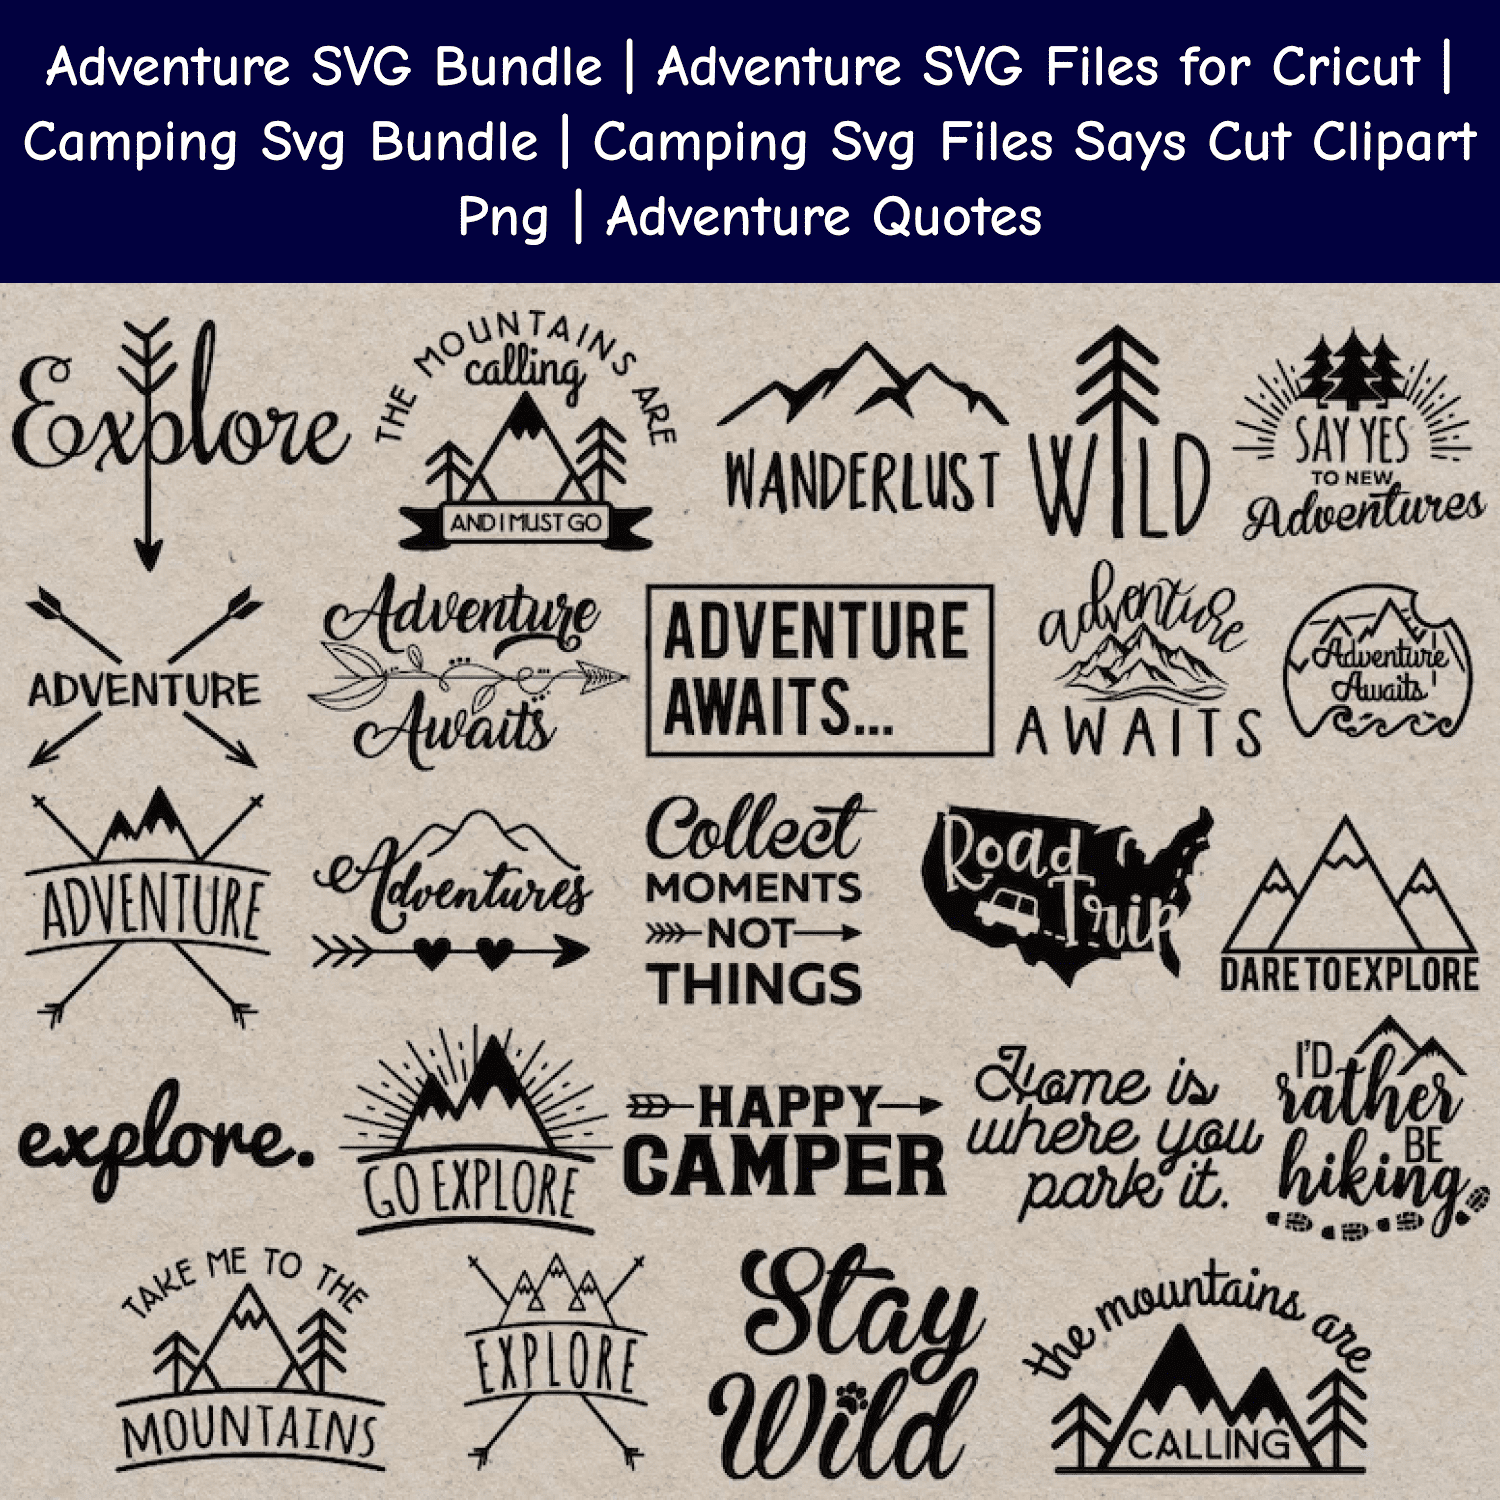 Adventure SVG Bundle cover.